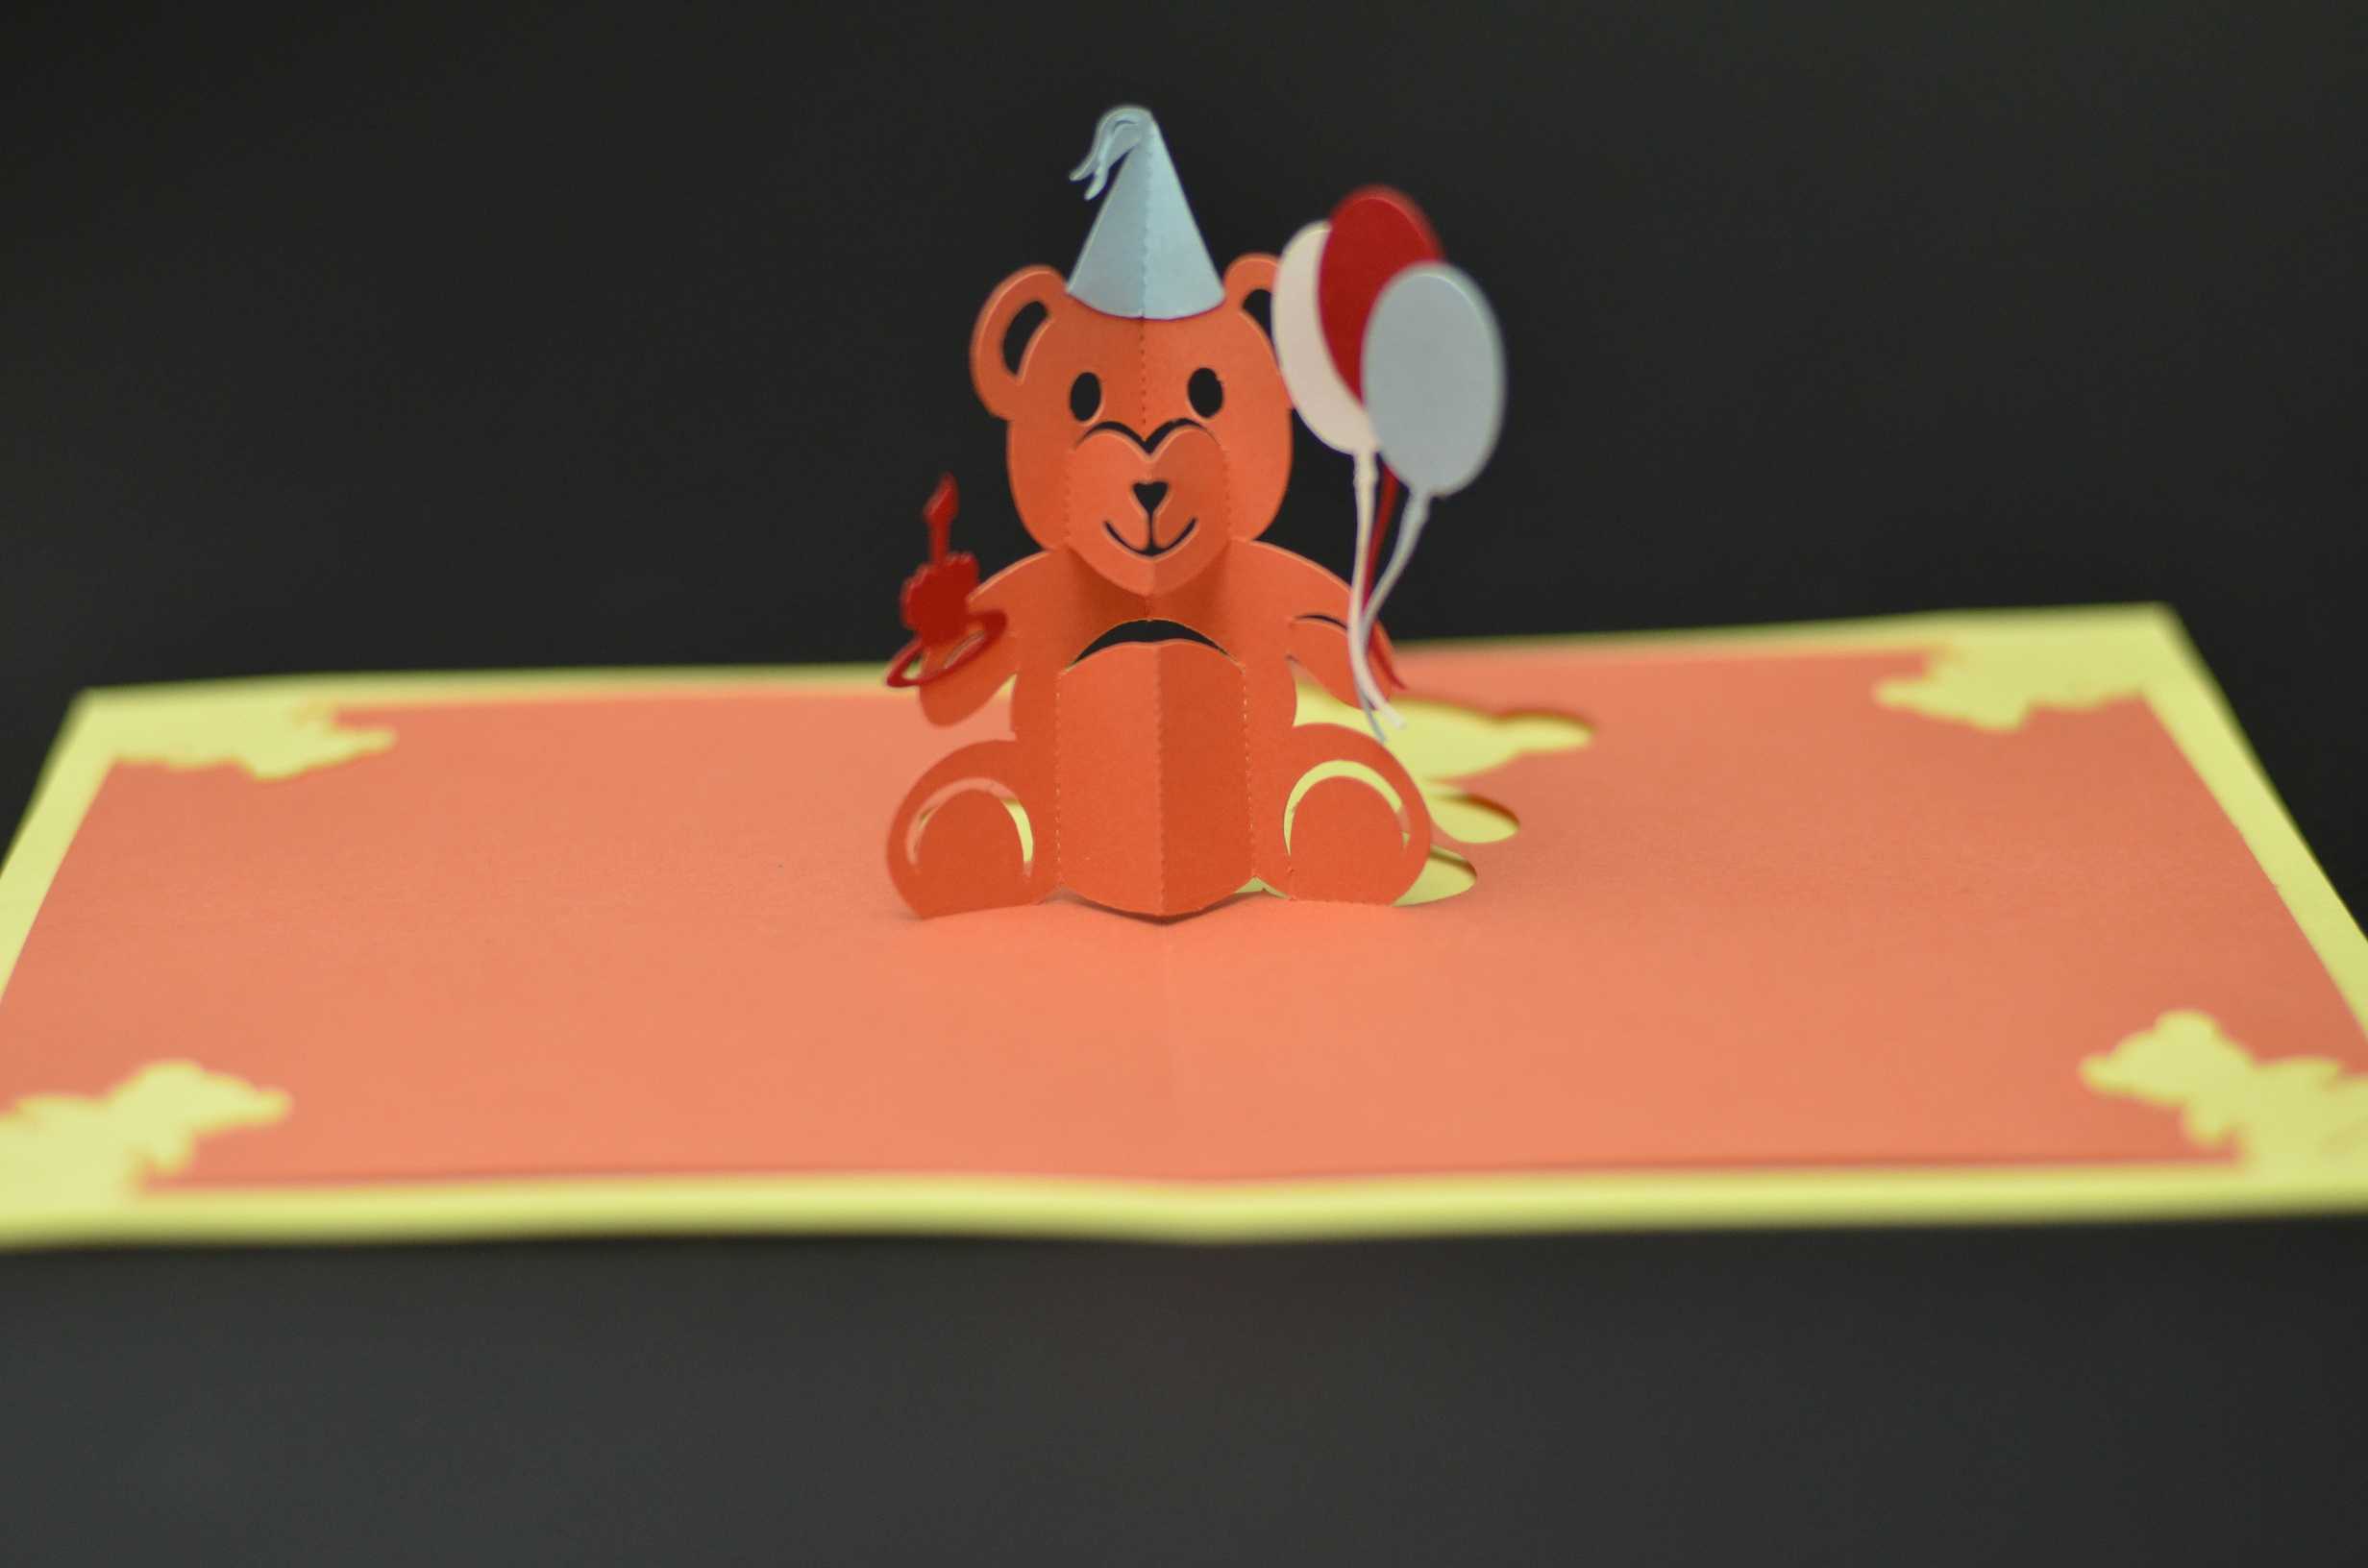 Teddy Bear Pop Up Card: Tutorial And Template – Creative Pop With Regard To Pop Up Card Templates Free Printable